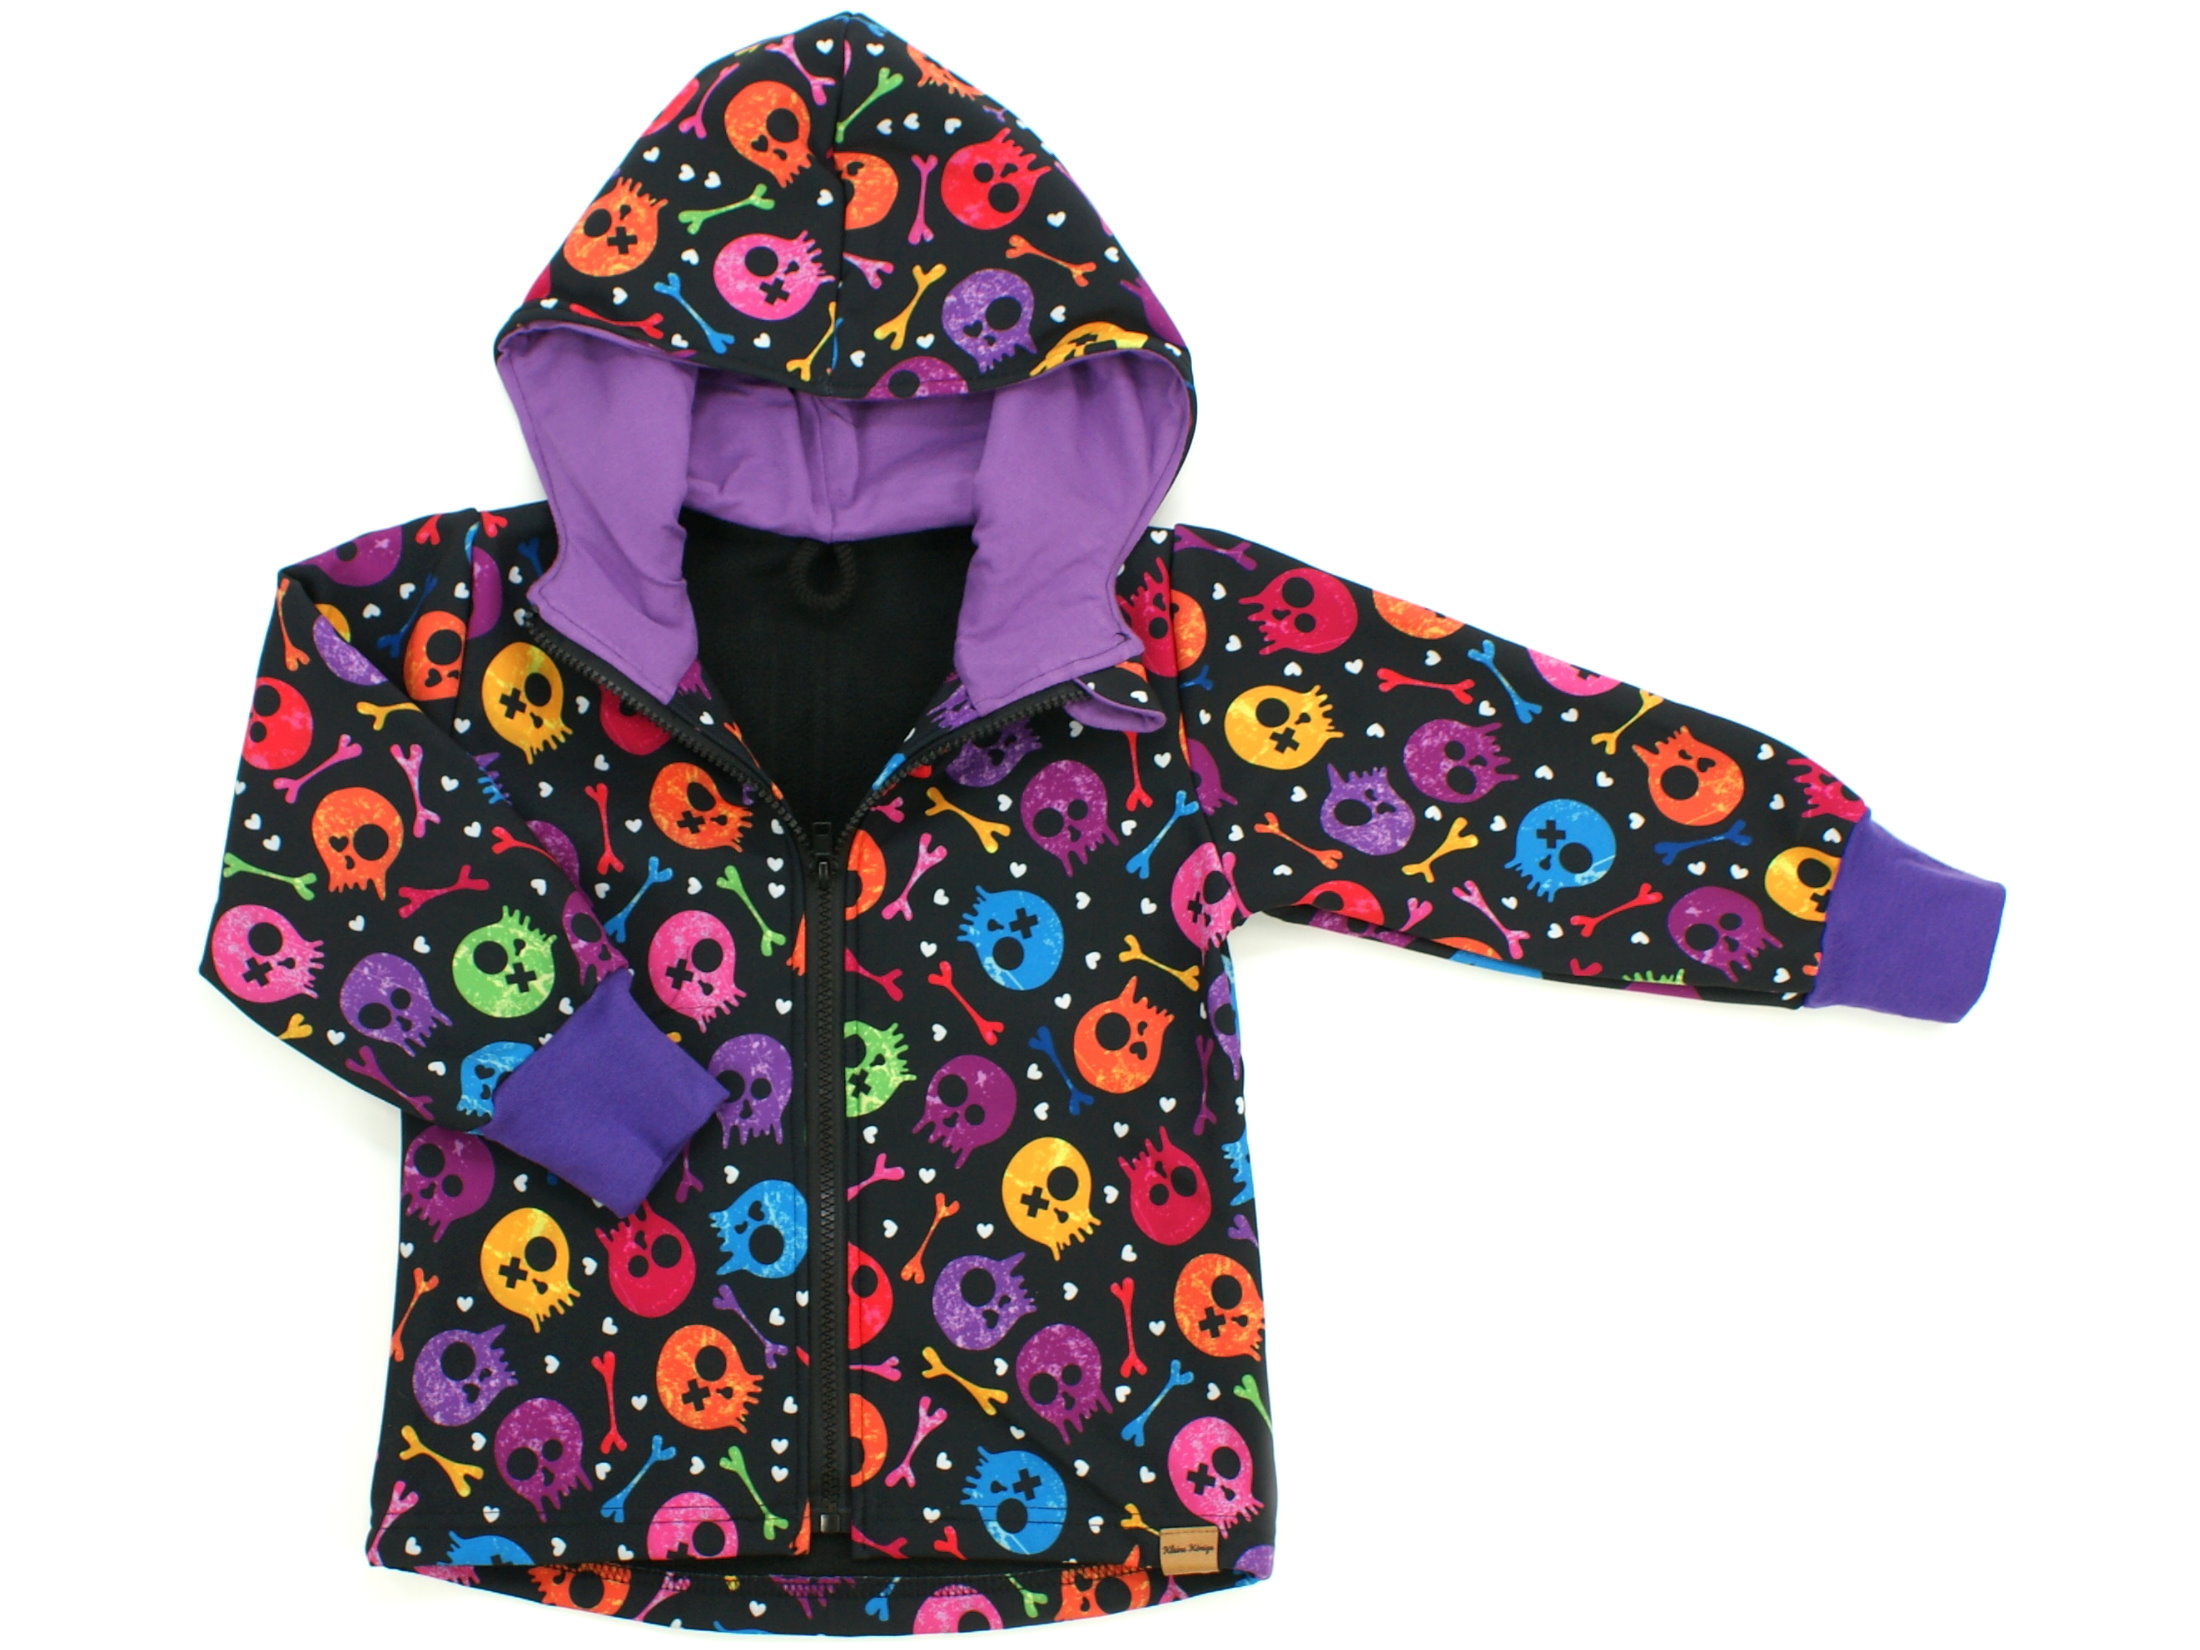 Kinder Softshell-Jacke "Colourful Skulls" lila schwarz